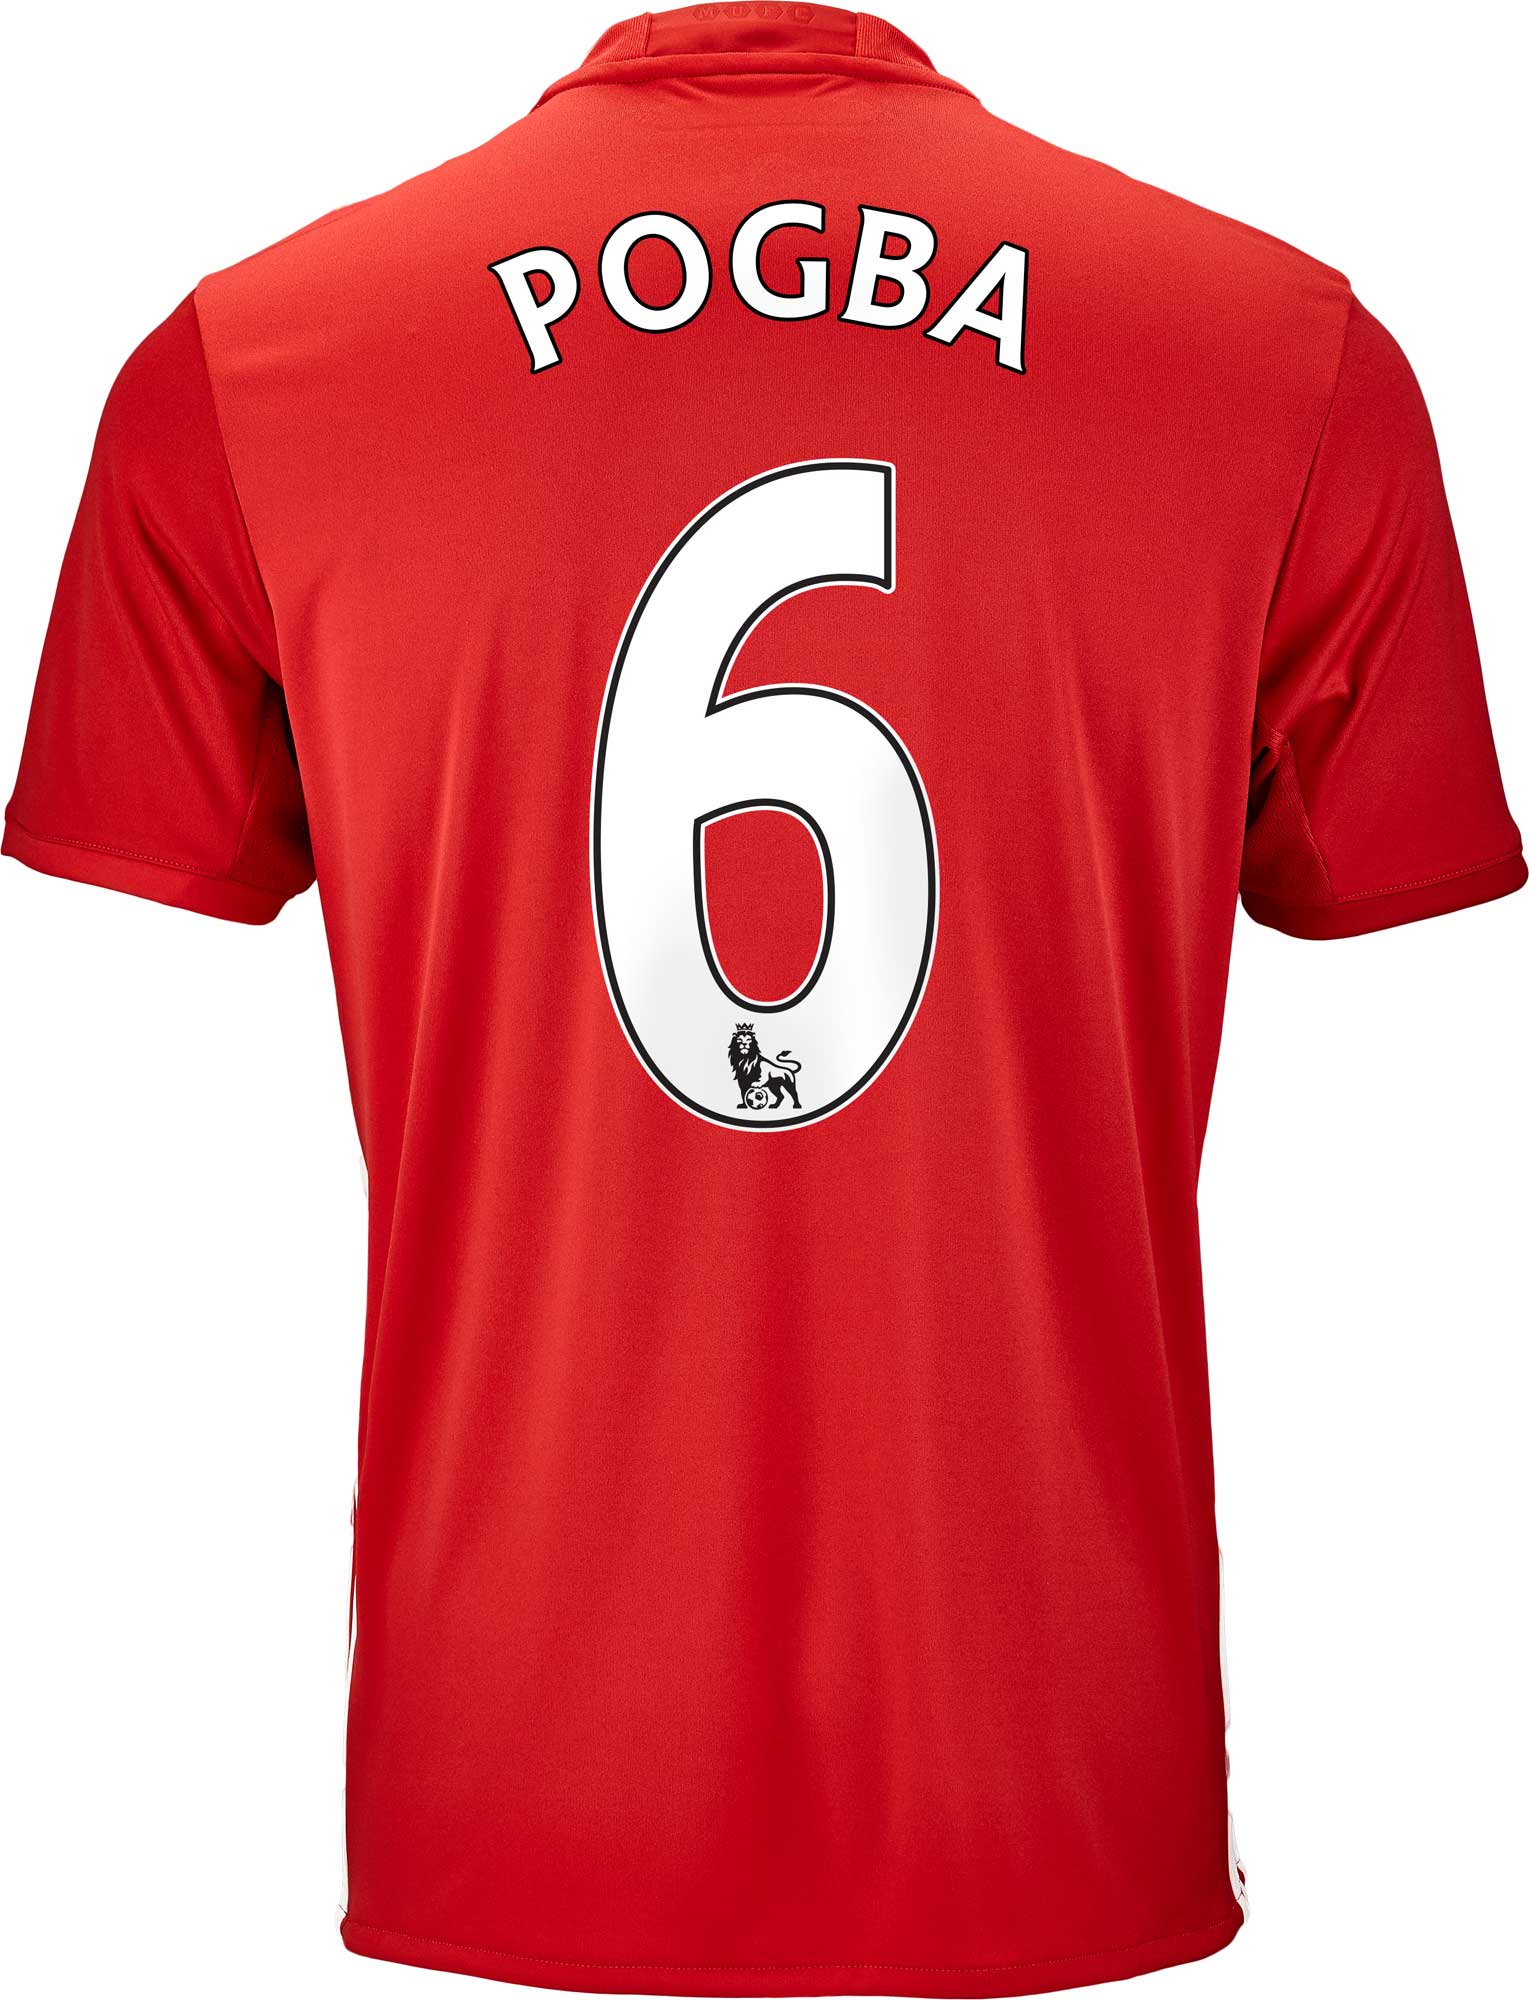 Pogba Manchester United Jersey - 2016 Pogba Jersey at SoccerPro